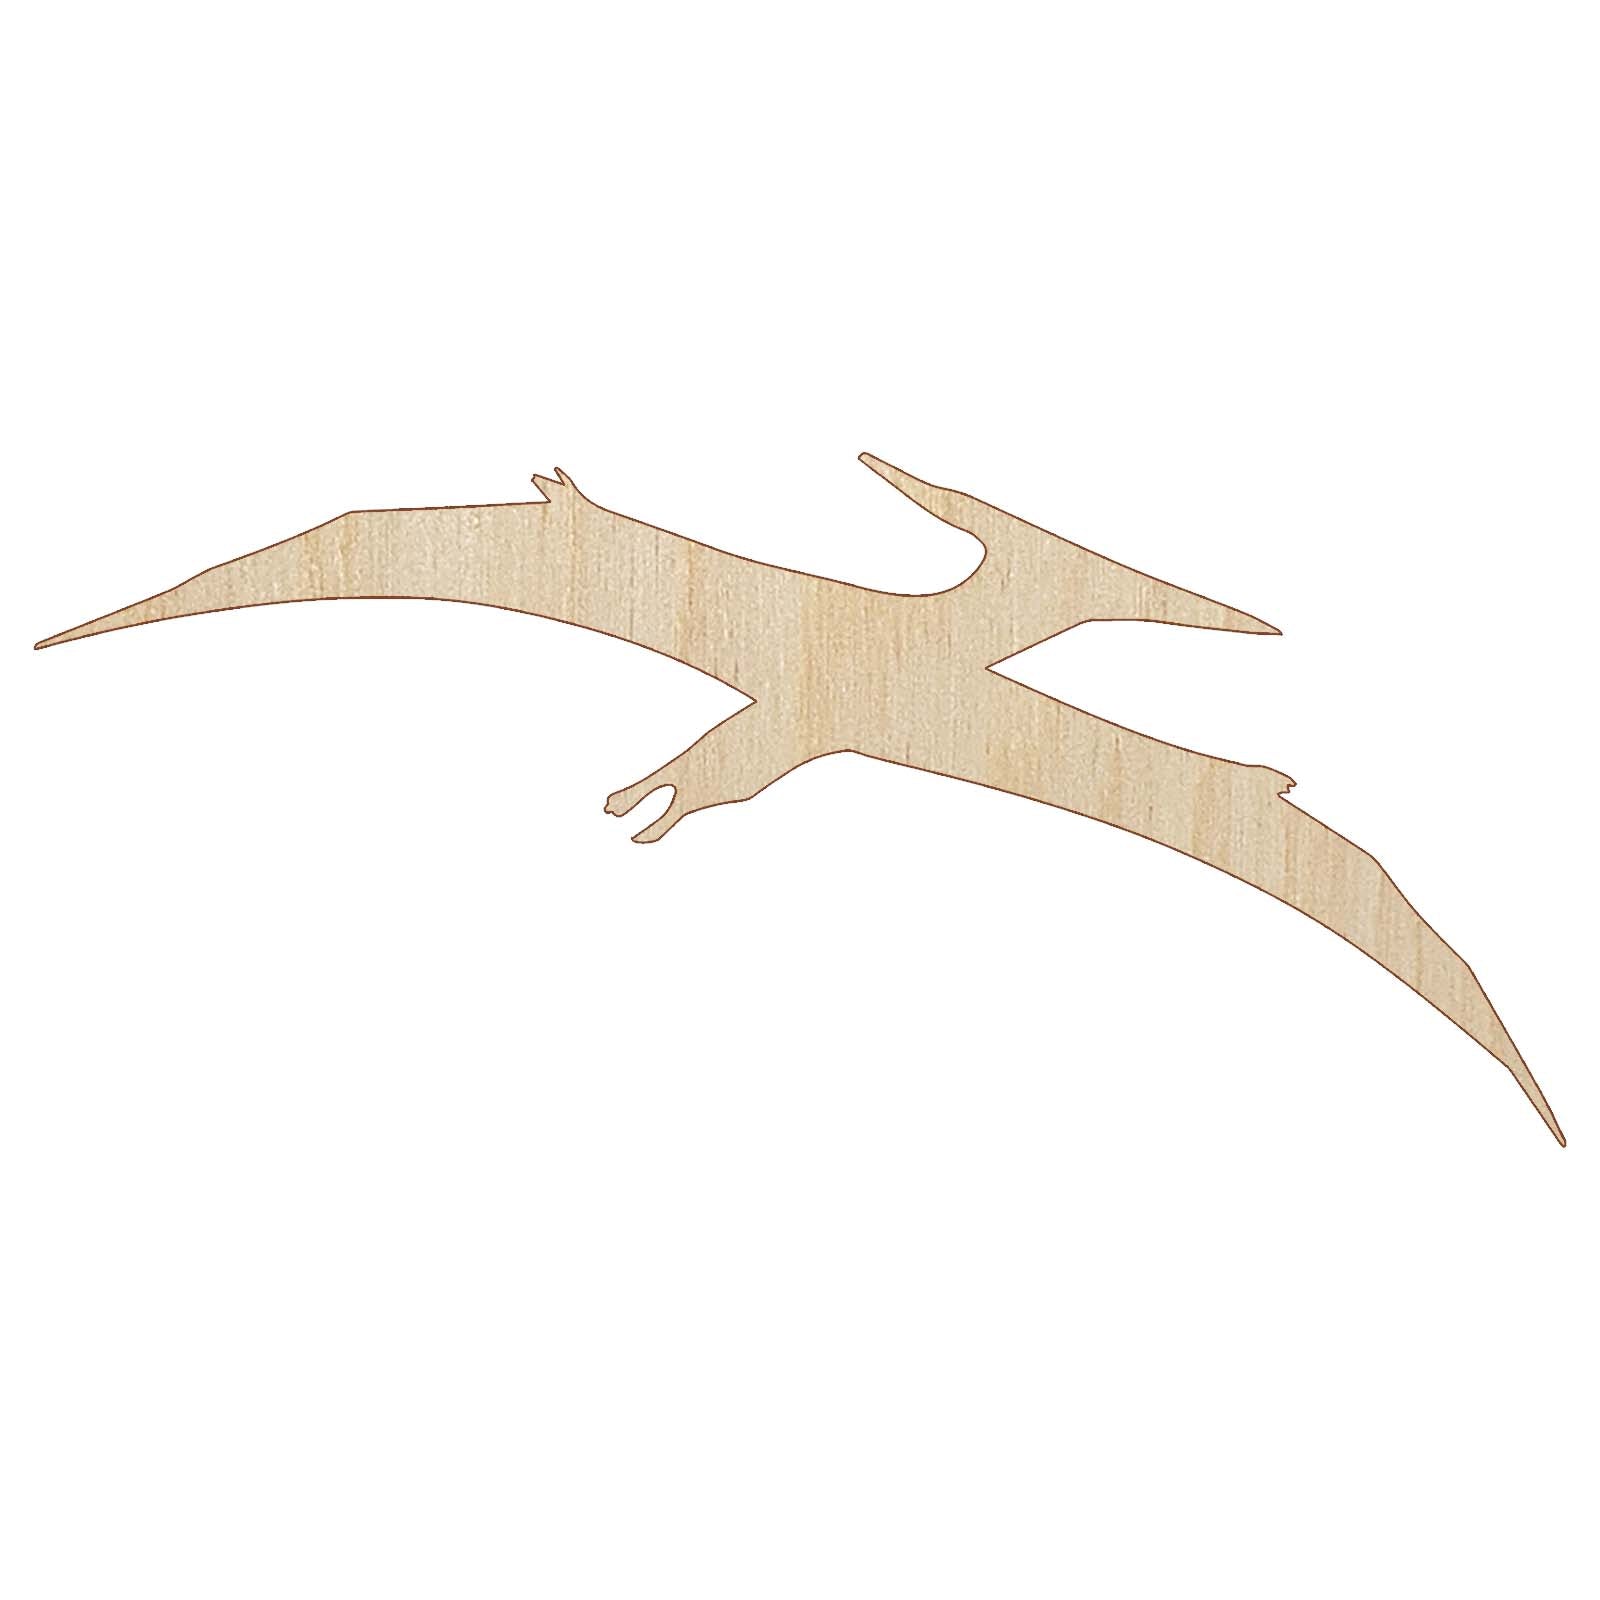 Pterodactyl Wood Cutout, Dinosaur Wood Cutouts, Animal Cutouts, Unfinished Wood Cutouts & Wood Shapes